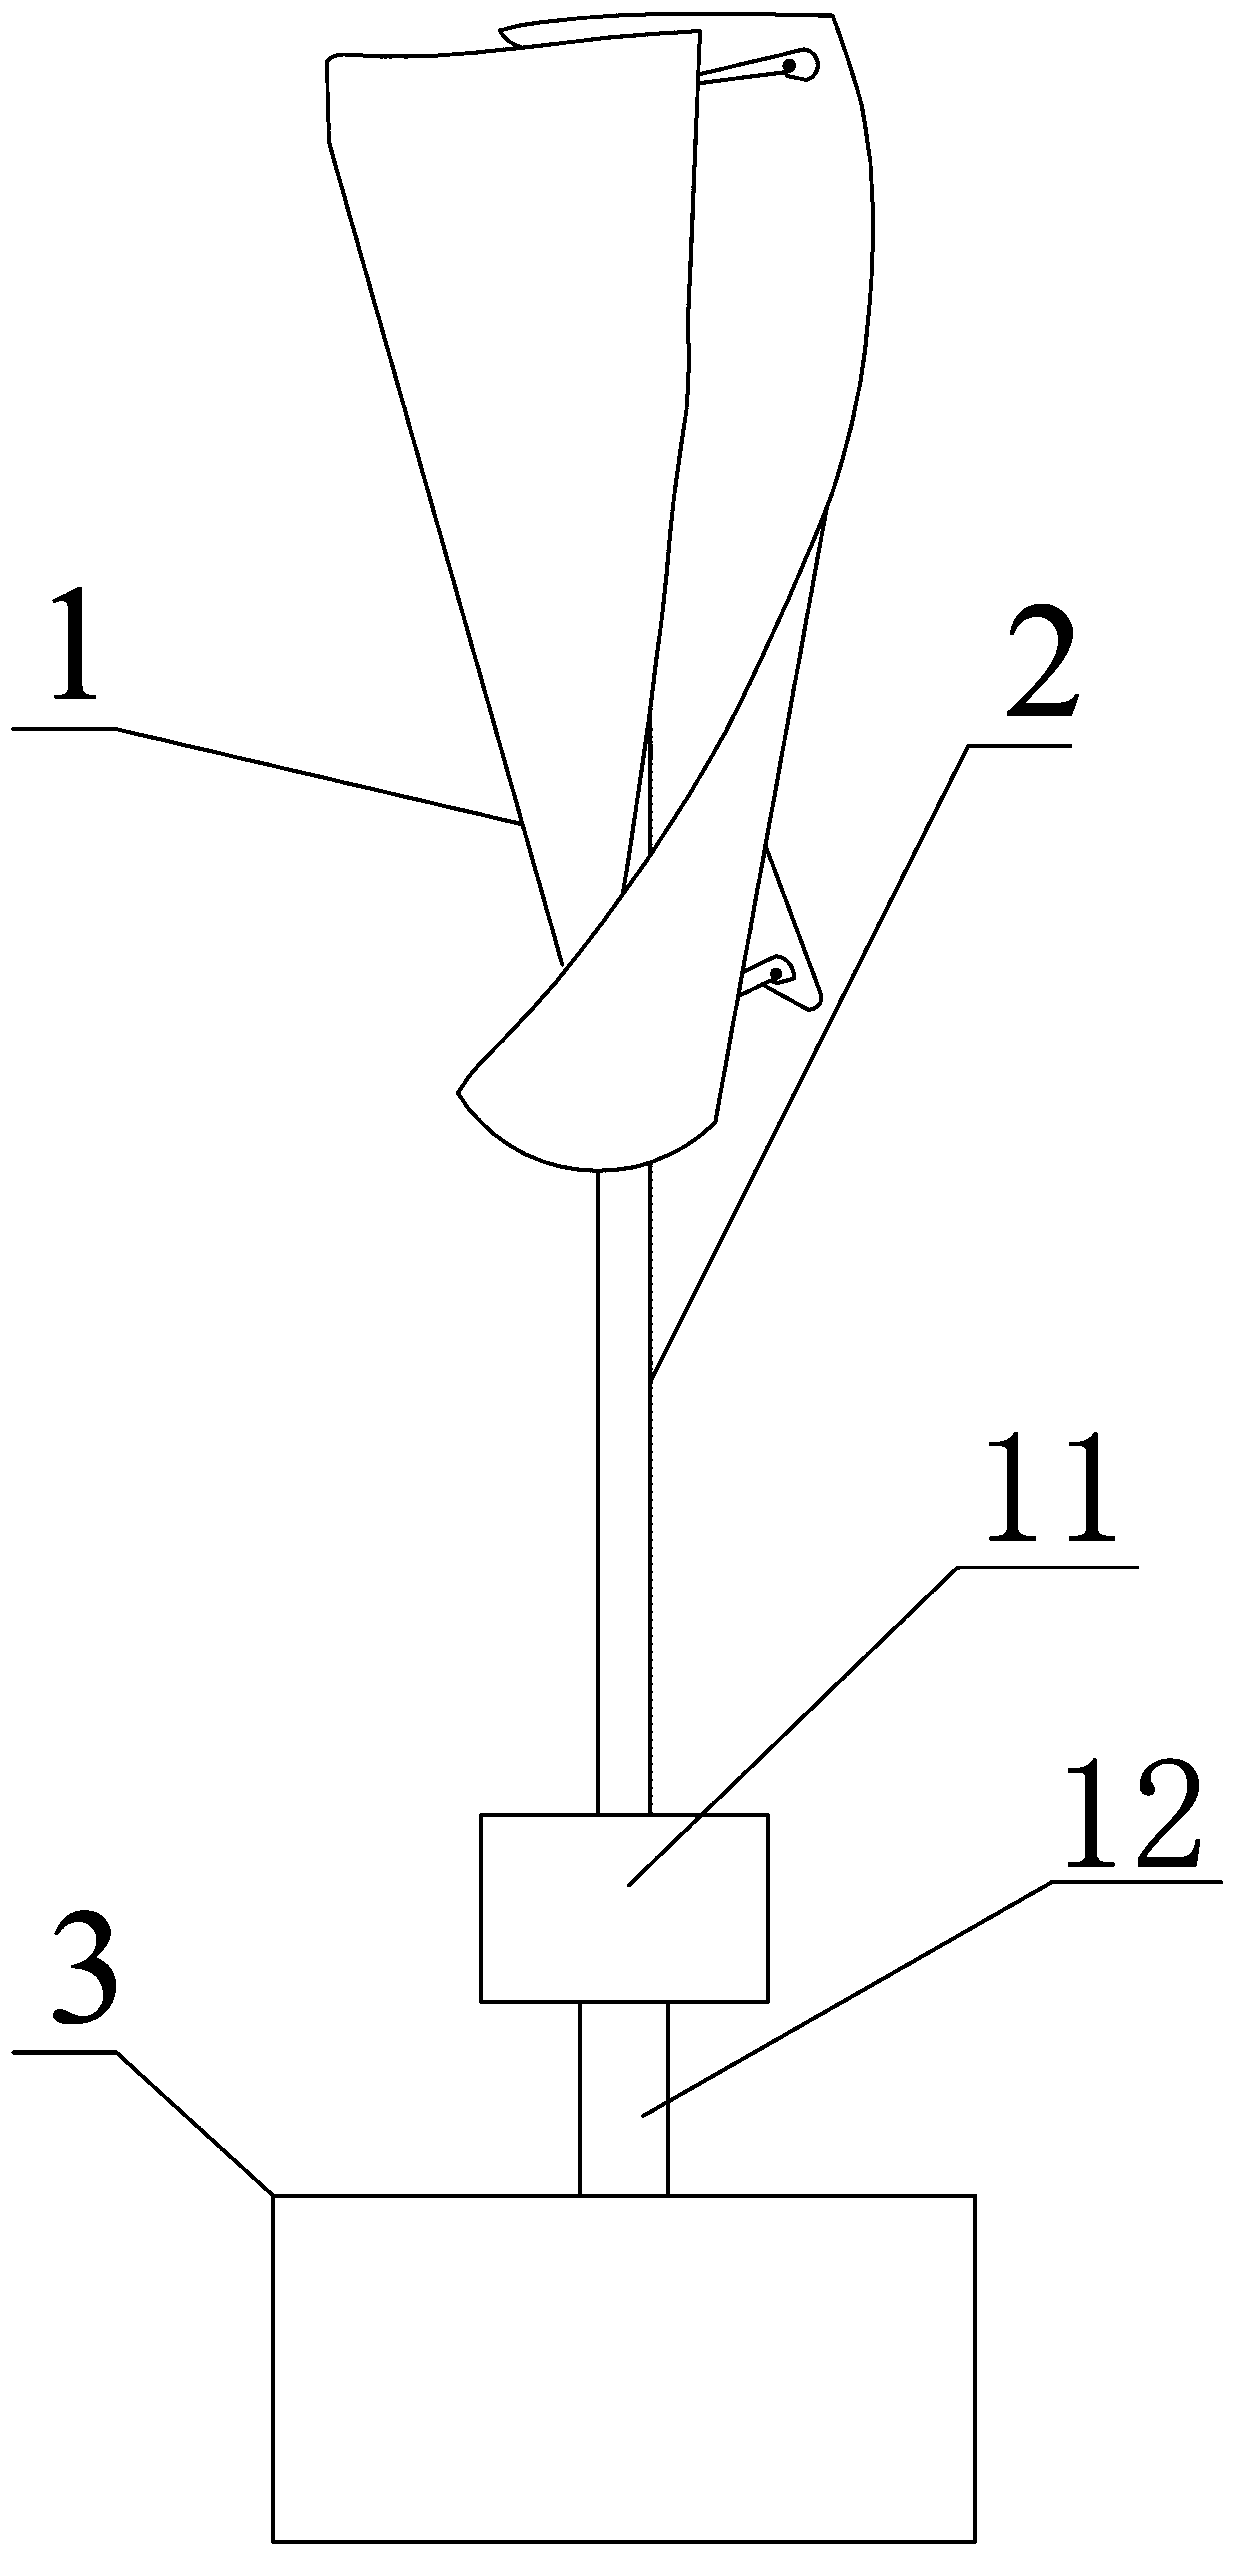 A vertical axis wind turbine